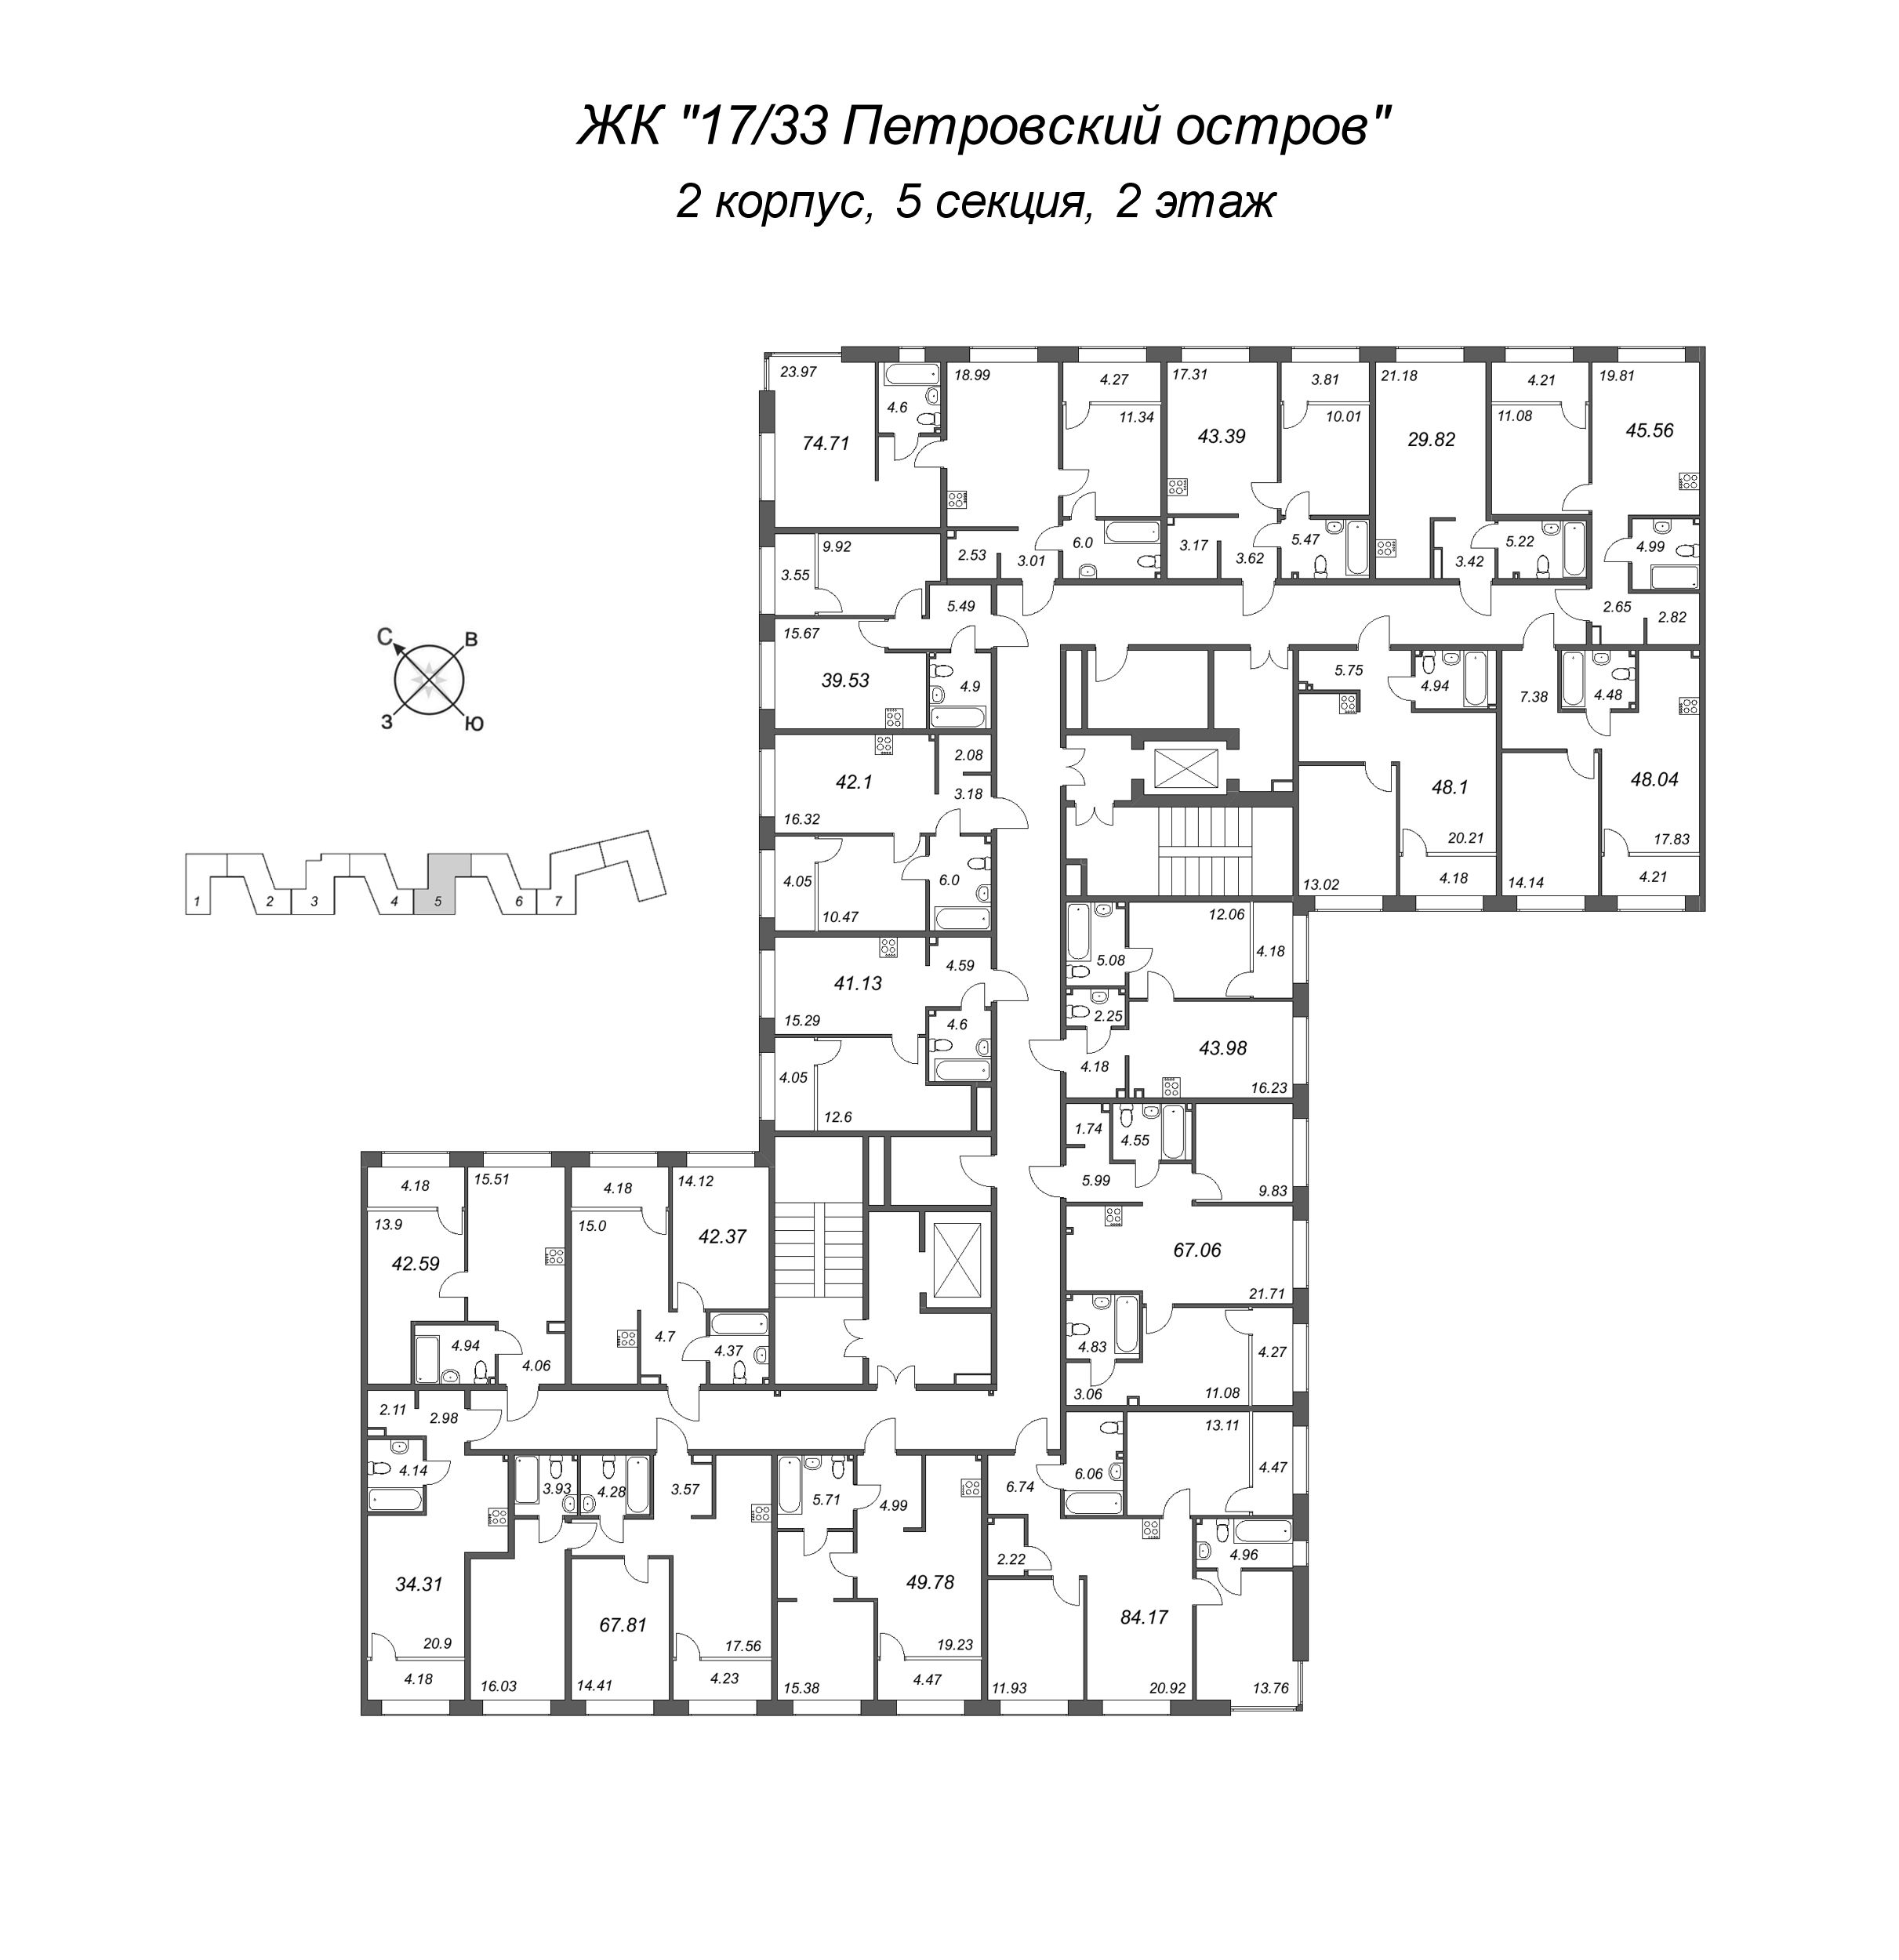 2-комнатная (Евро) квартира, 42.37 м² - планировка этажа